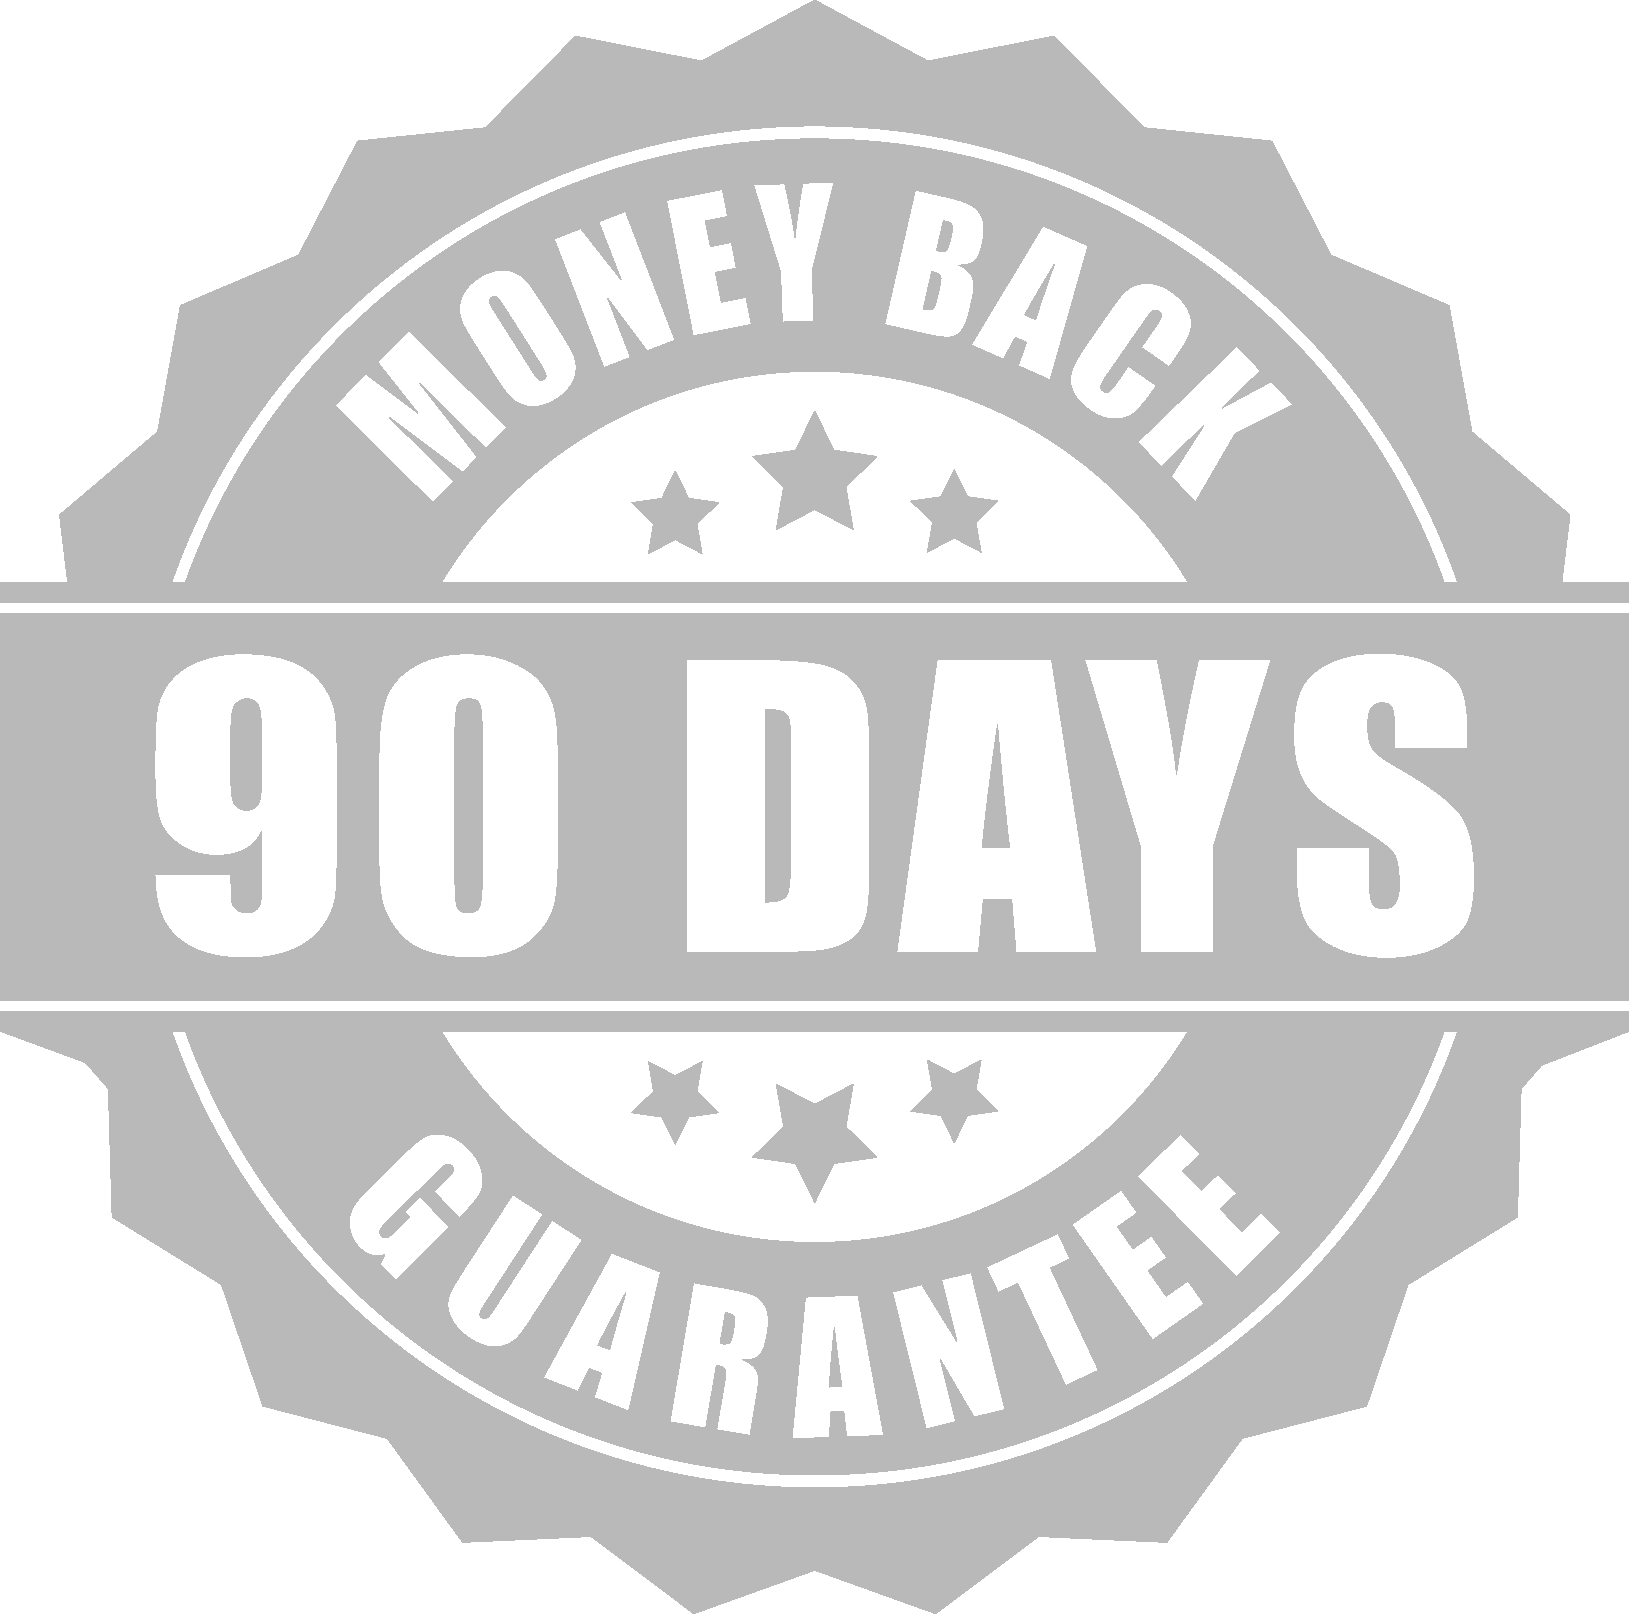 90 day money back guarantee